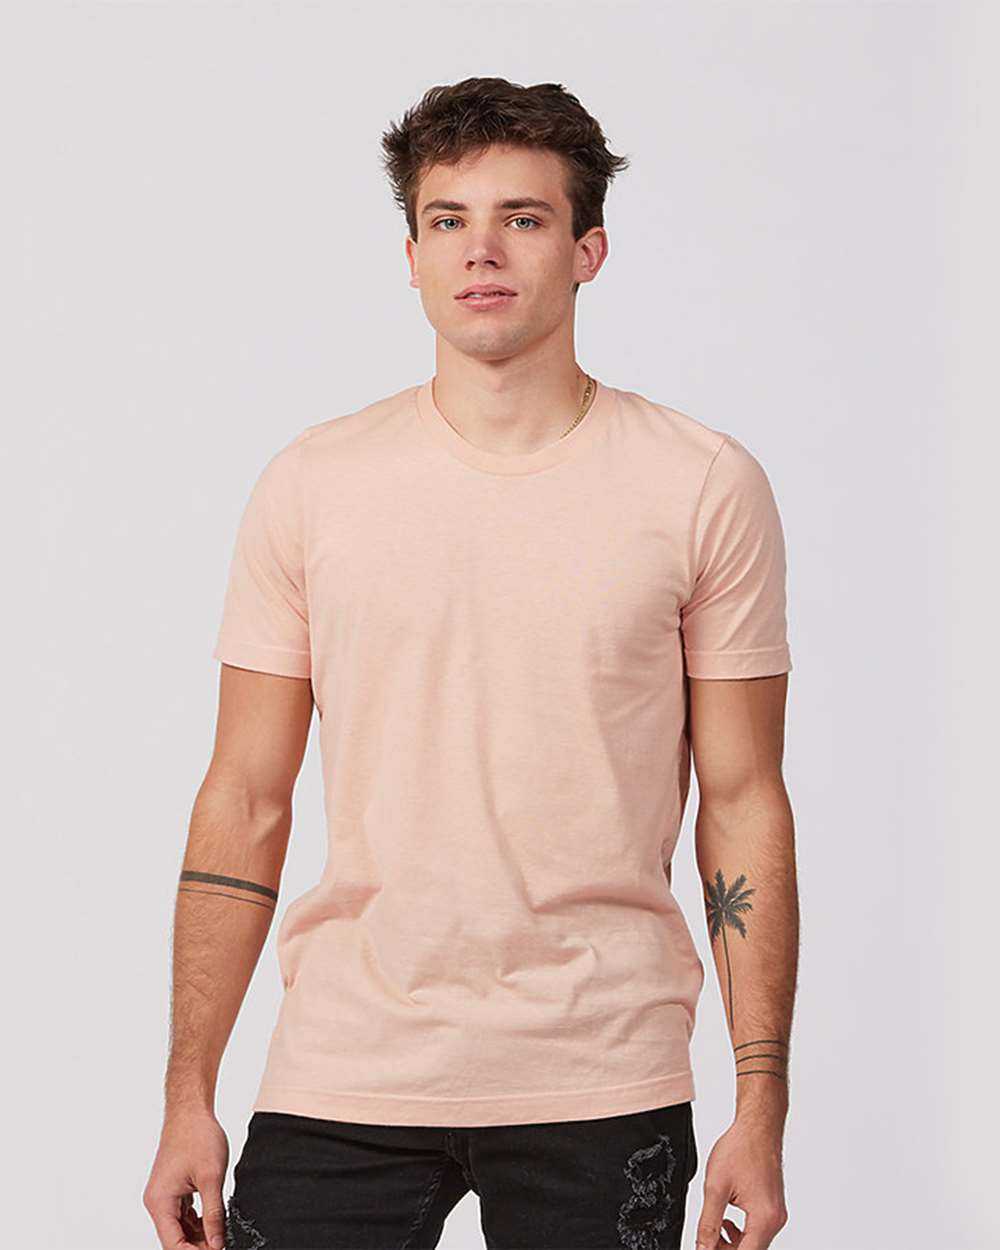 Tultex 502 Premium Cotton T-Shirt - Peach - HIT a Double